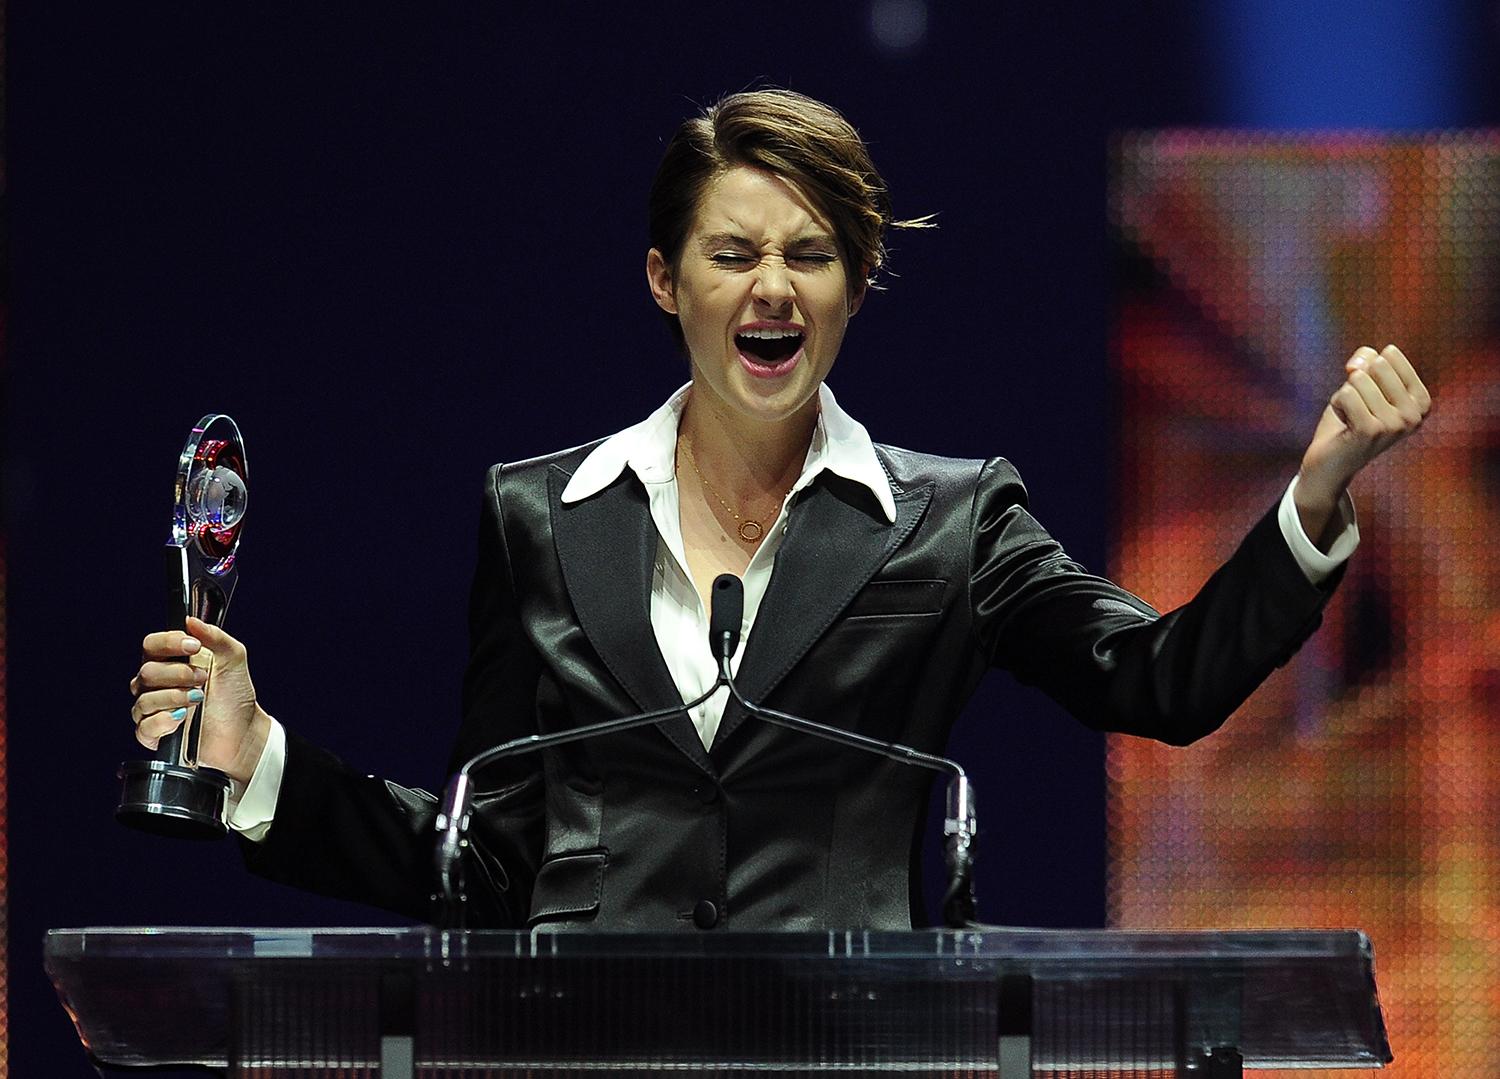 Shailene Woodley jublar när hon tar emot priset ”Female star of tomorrow” på Big Screen Achievement Awards i Las Vegas i mars 2014.